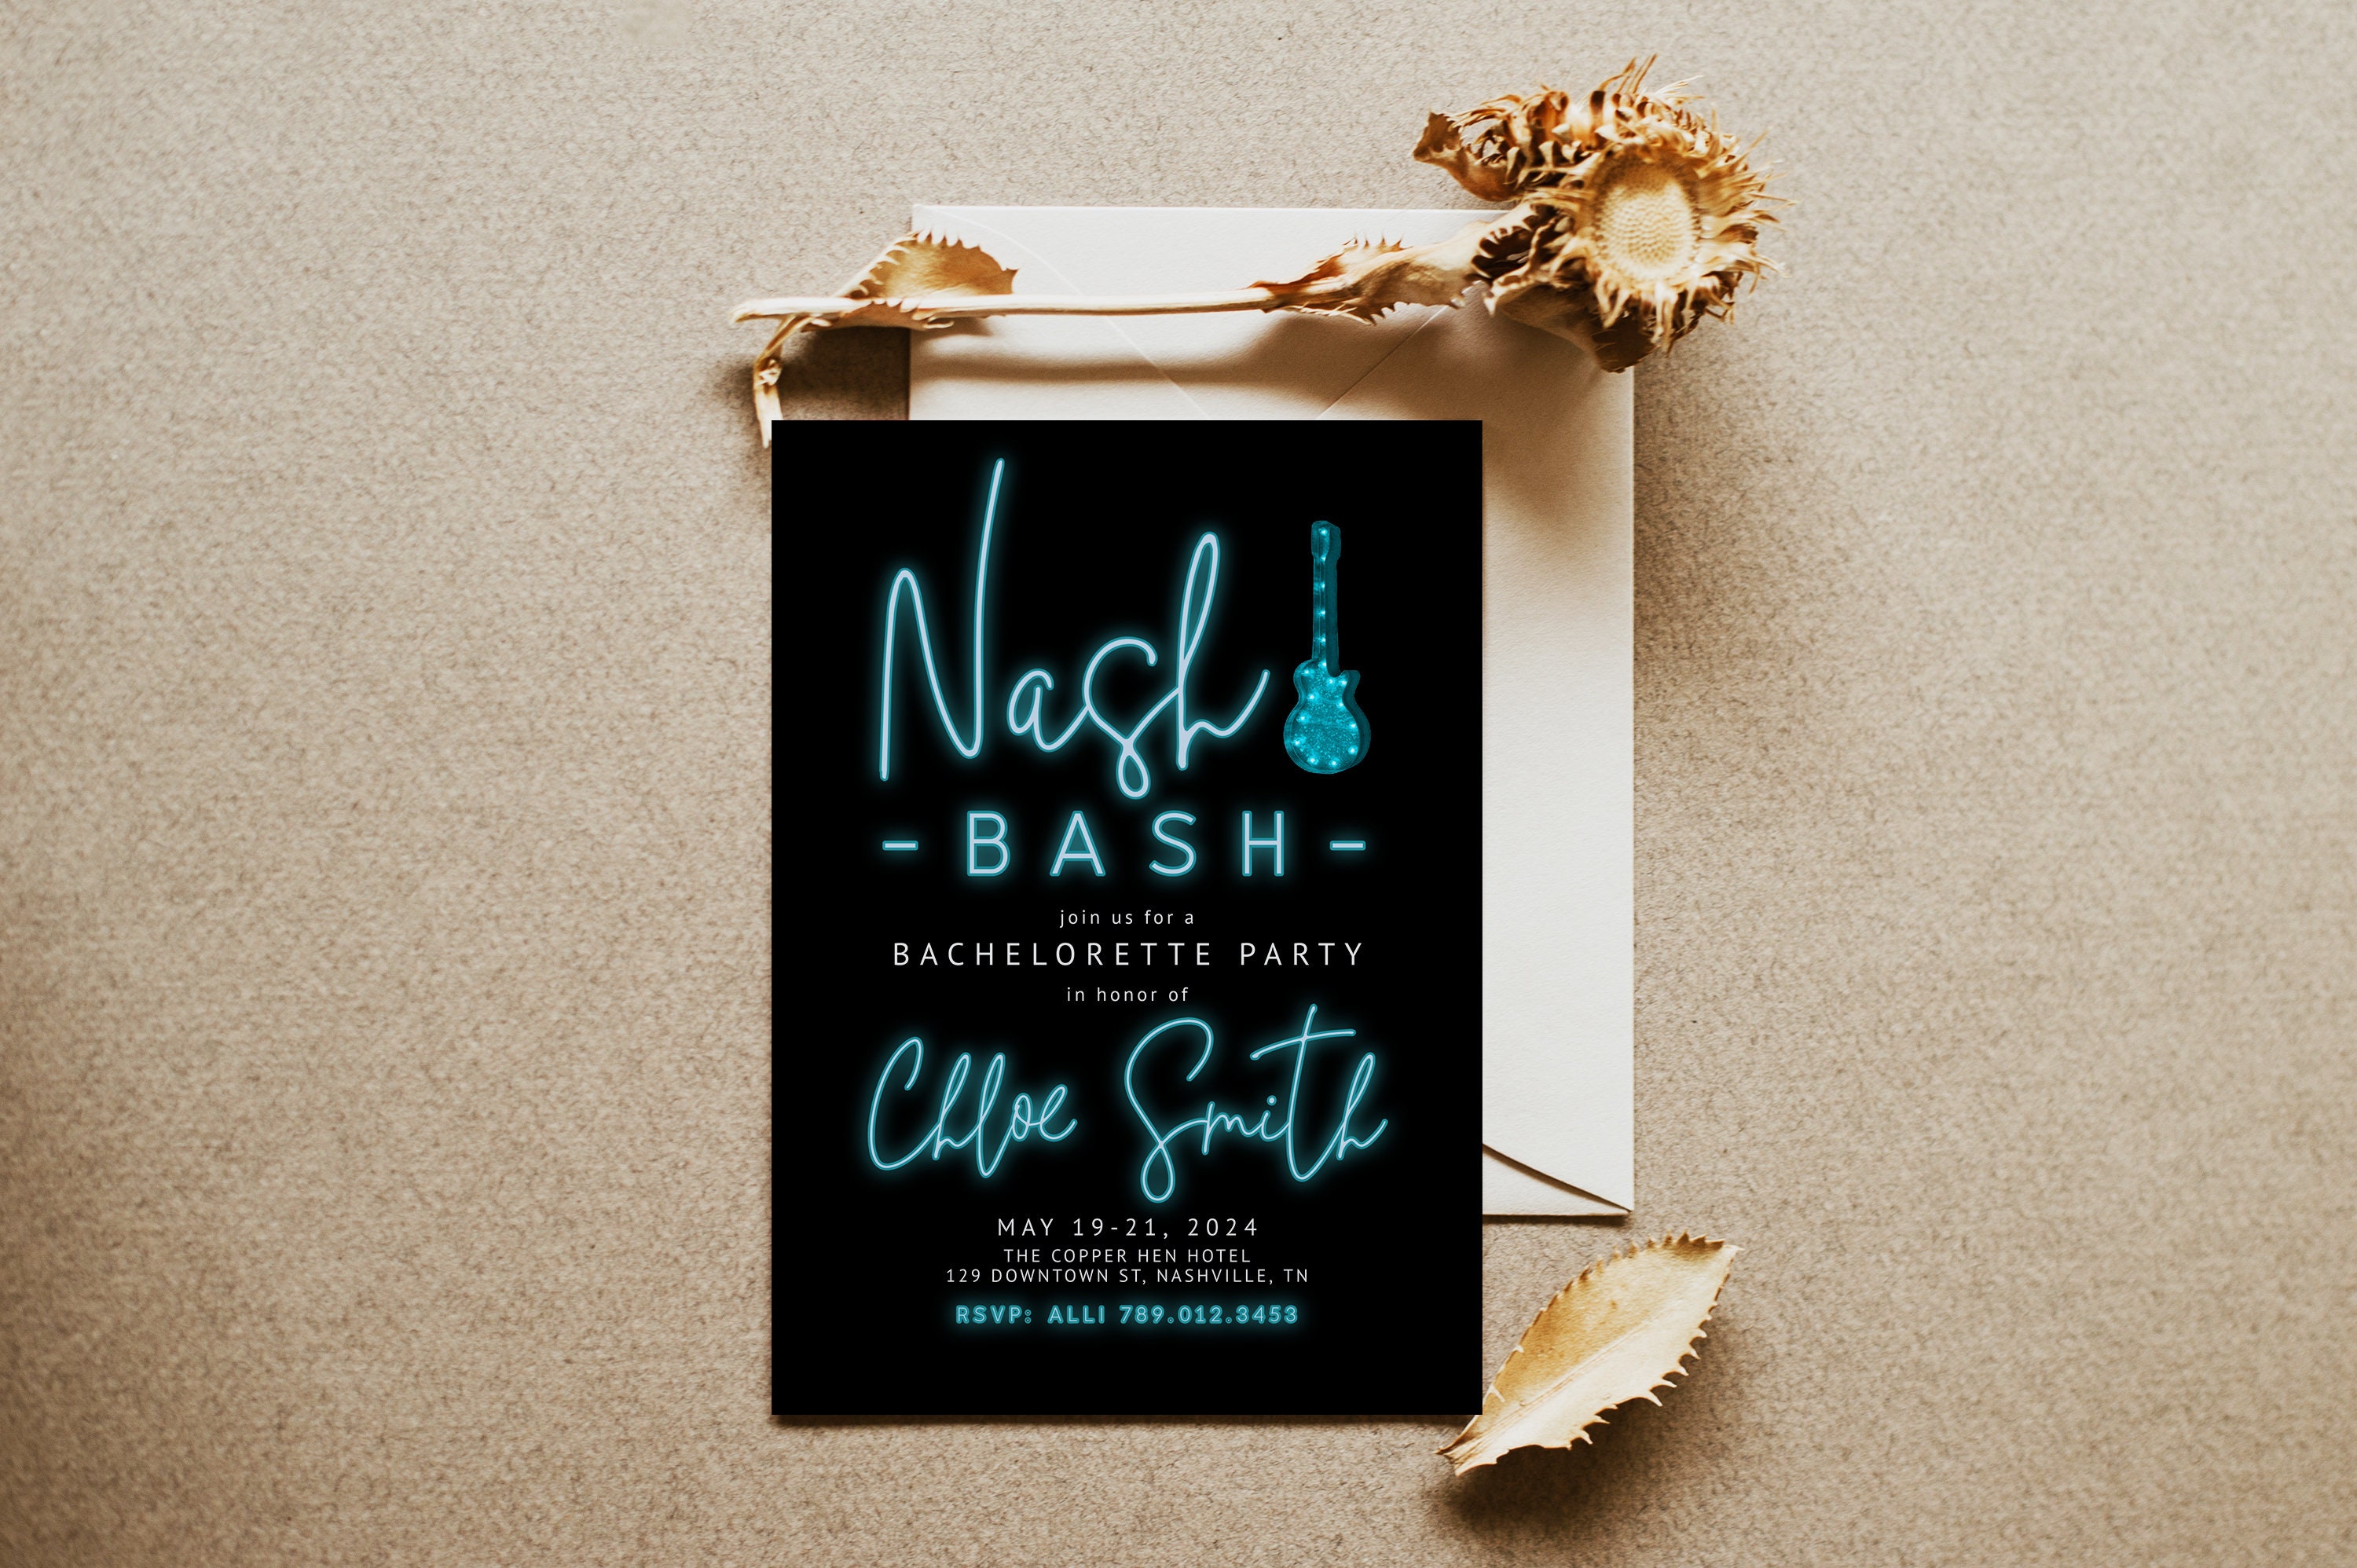 Nash Bash Bachelorette Party Invitation Nashville Bridal Etsy 日本